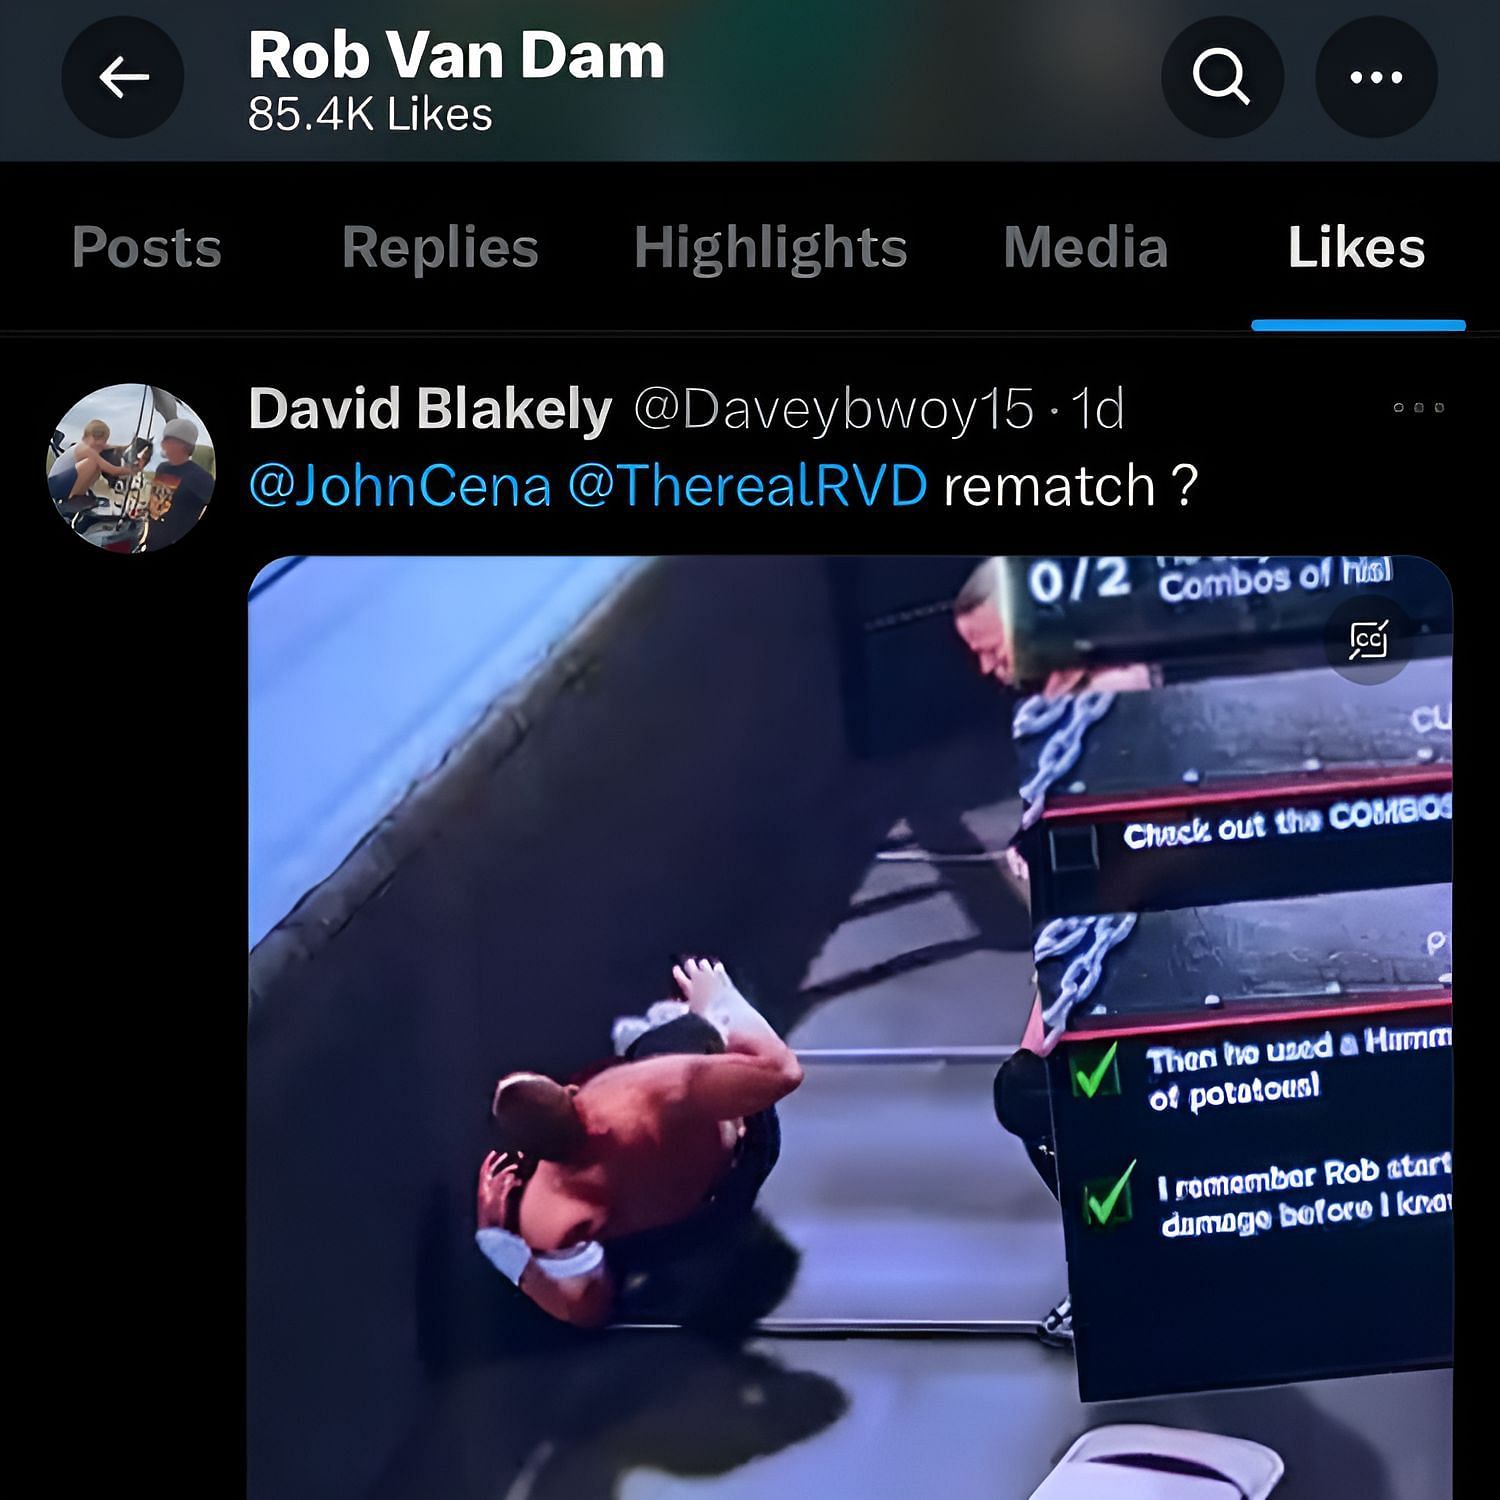 Rob Van Dam liked this post